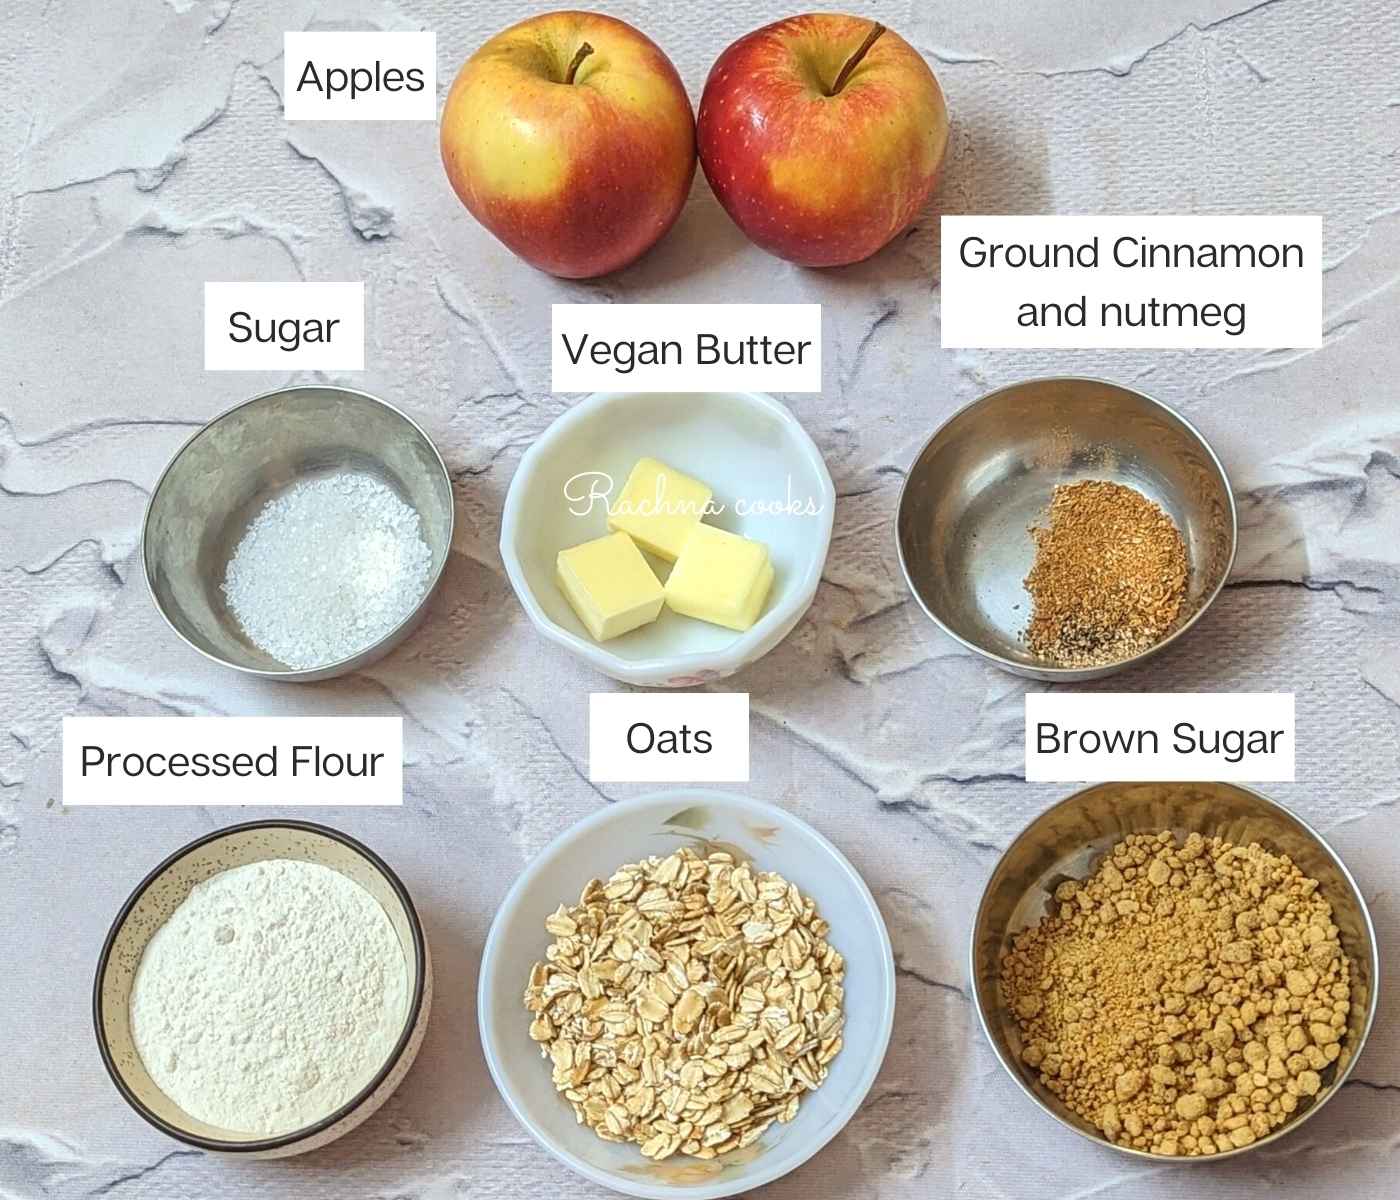 Ingredients for apple crisp: Apples, vegan butter, cinnamon and nutmeg, brown sugar, sugar, processed flour and oats